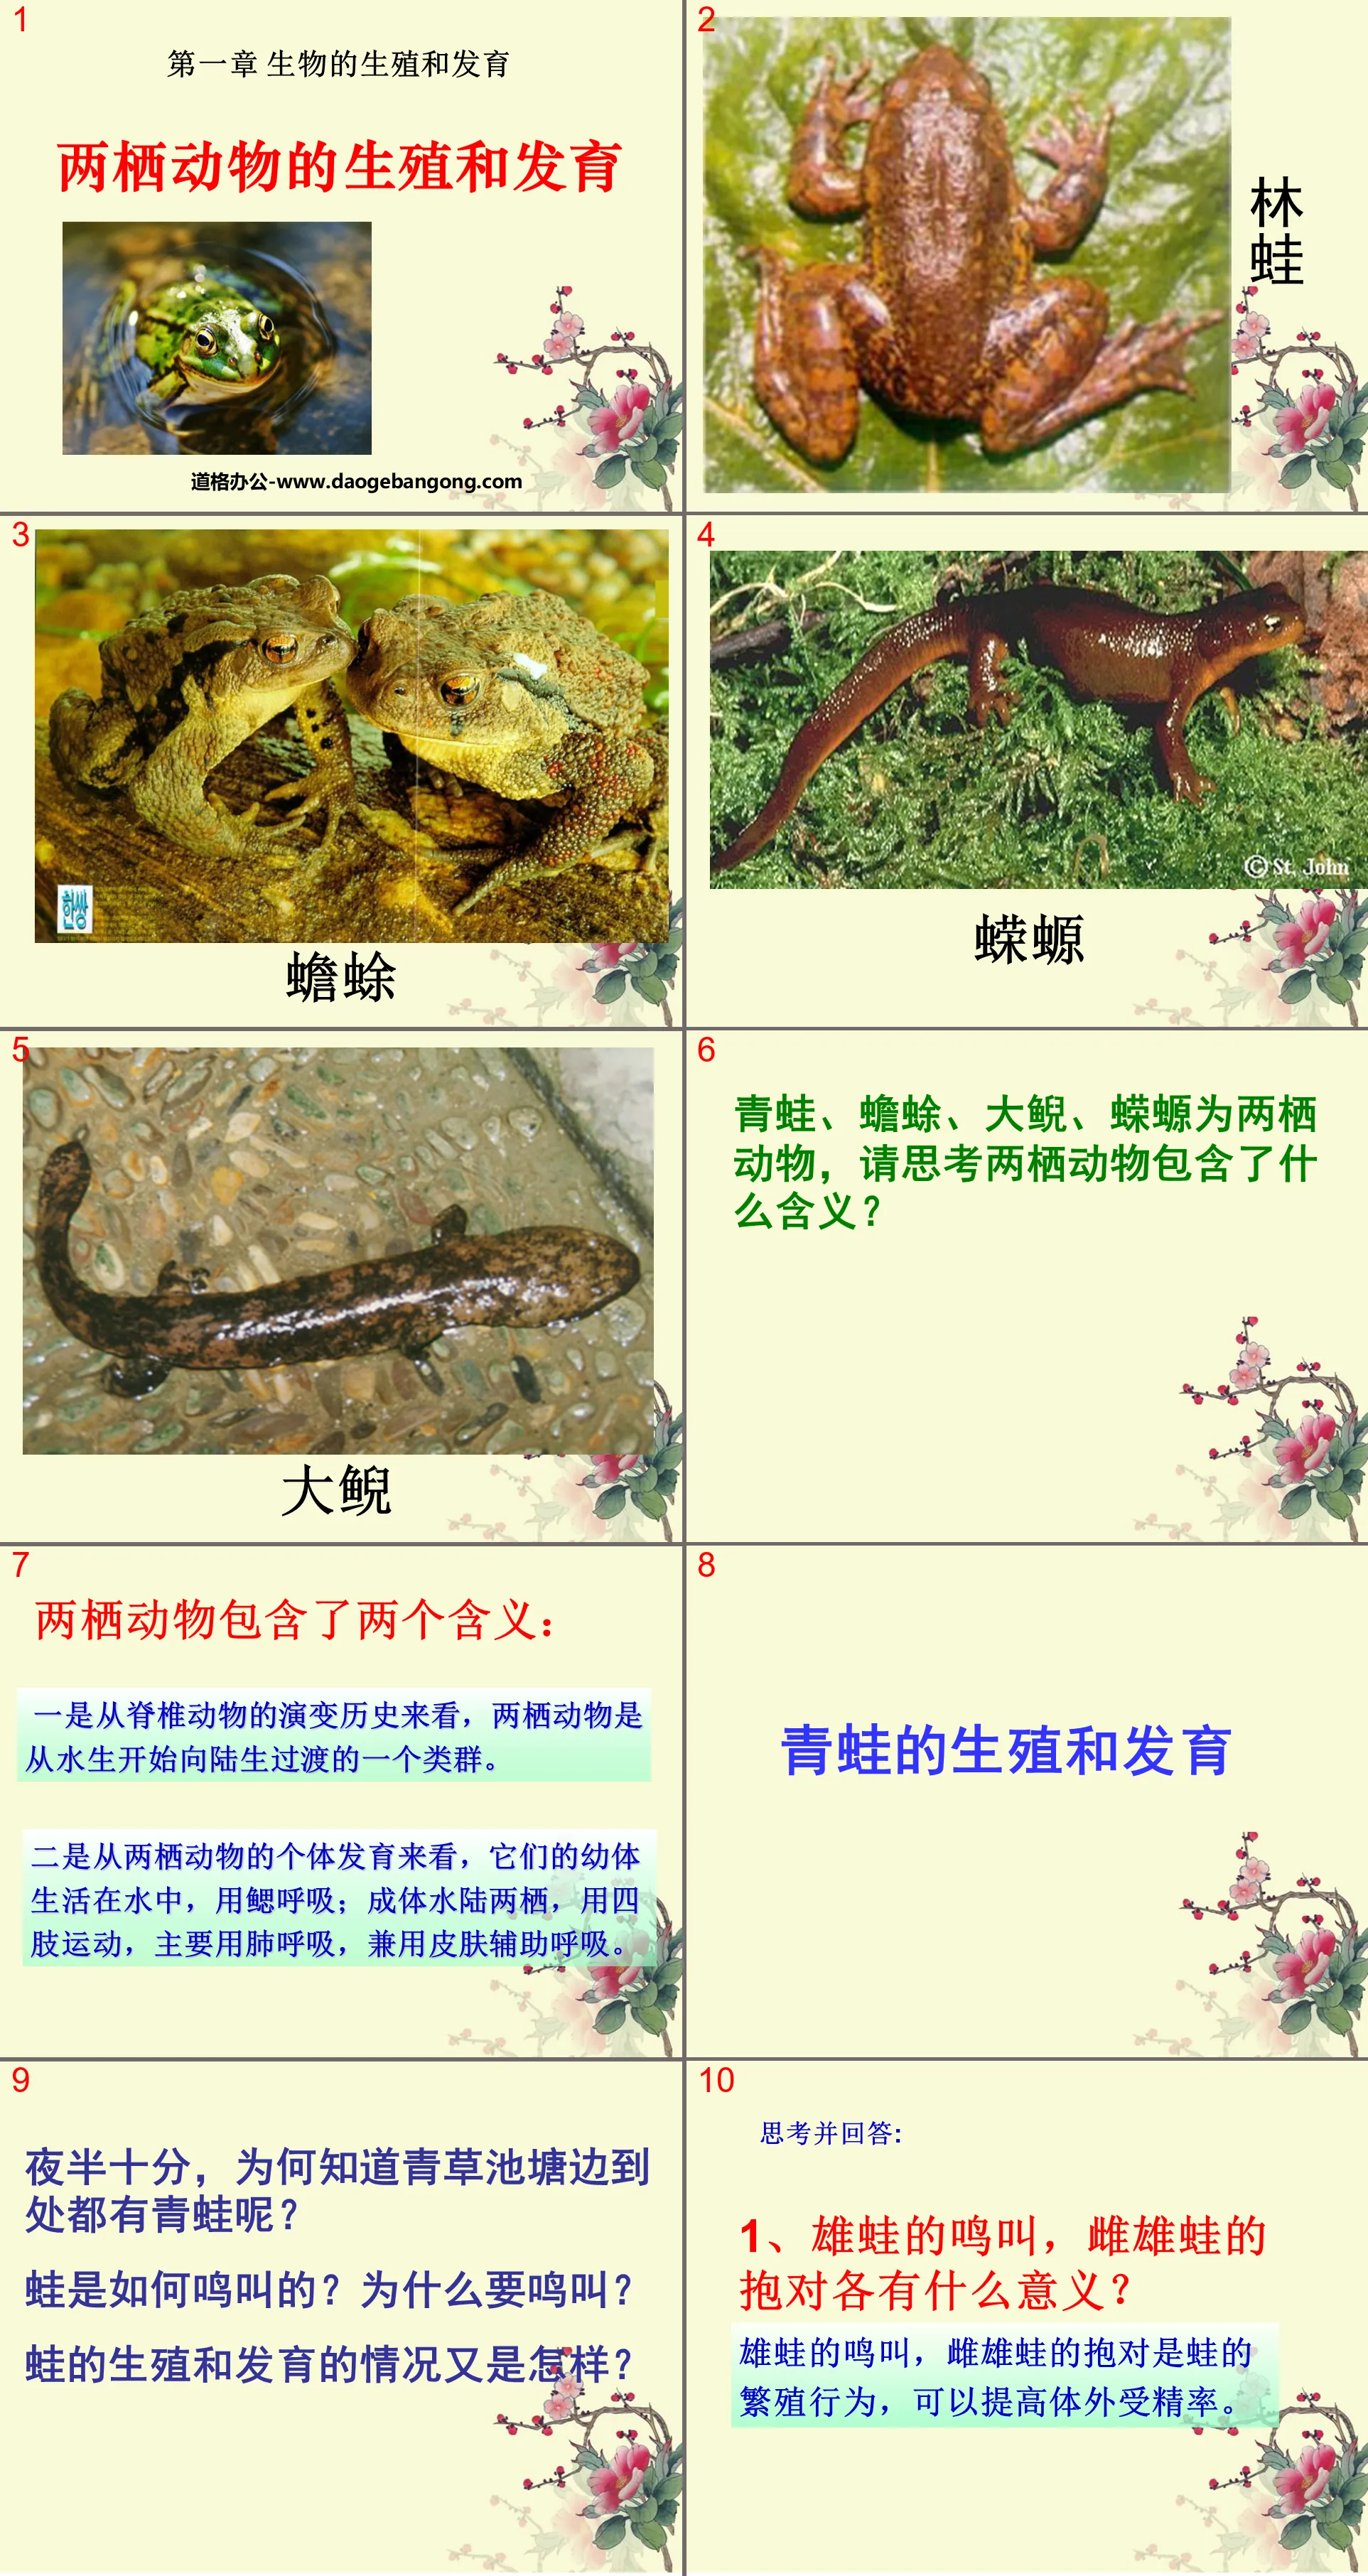 "Reproduction and Development of Amphibians" Reproduction and Development of Biological Organisms PPT Courseware 6